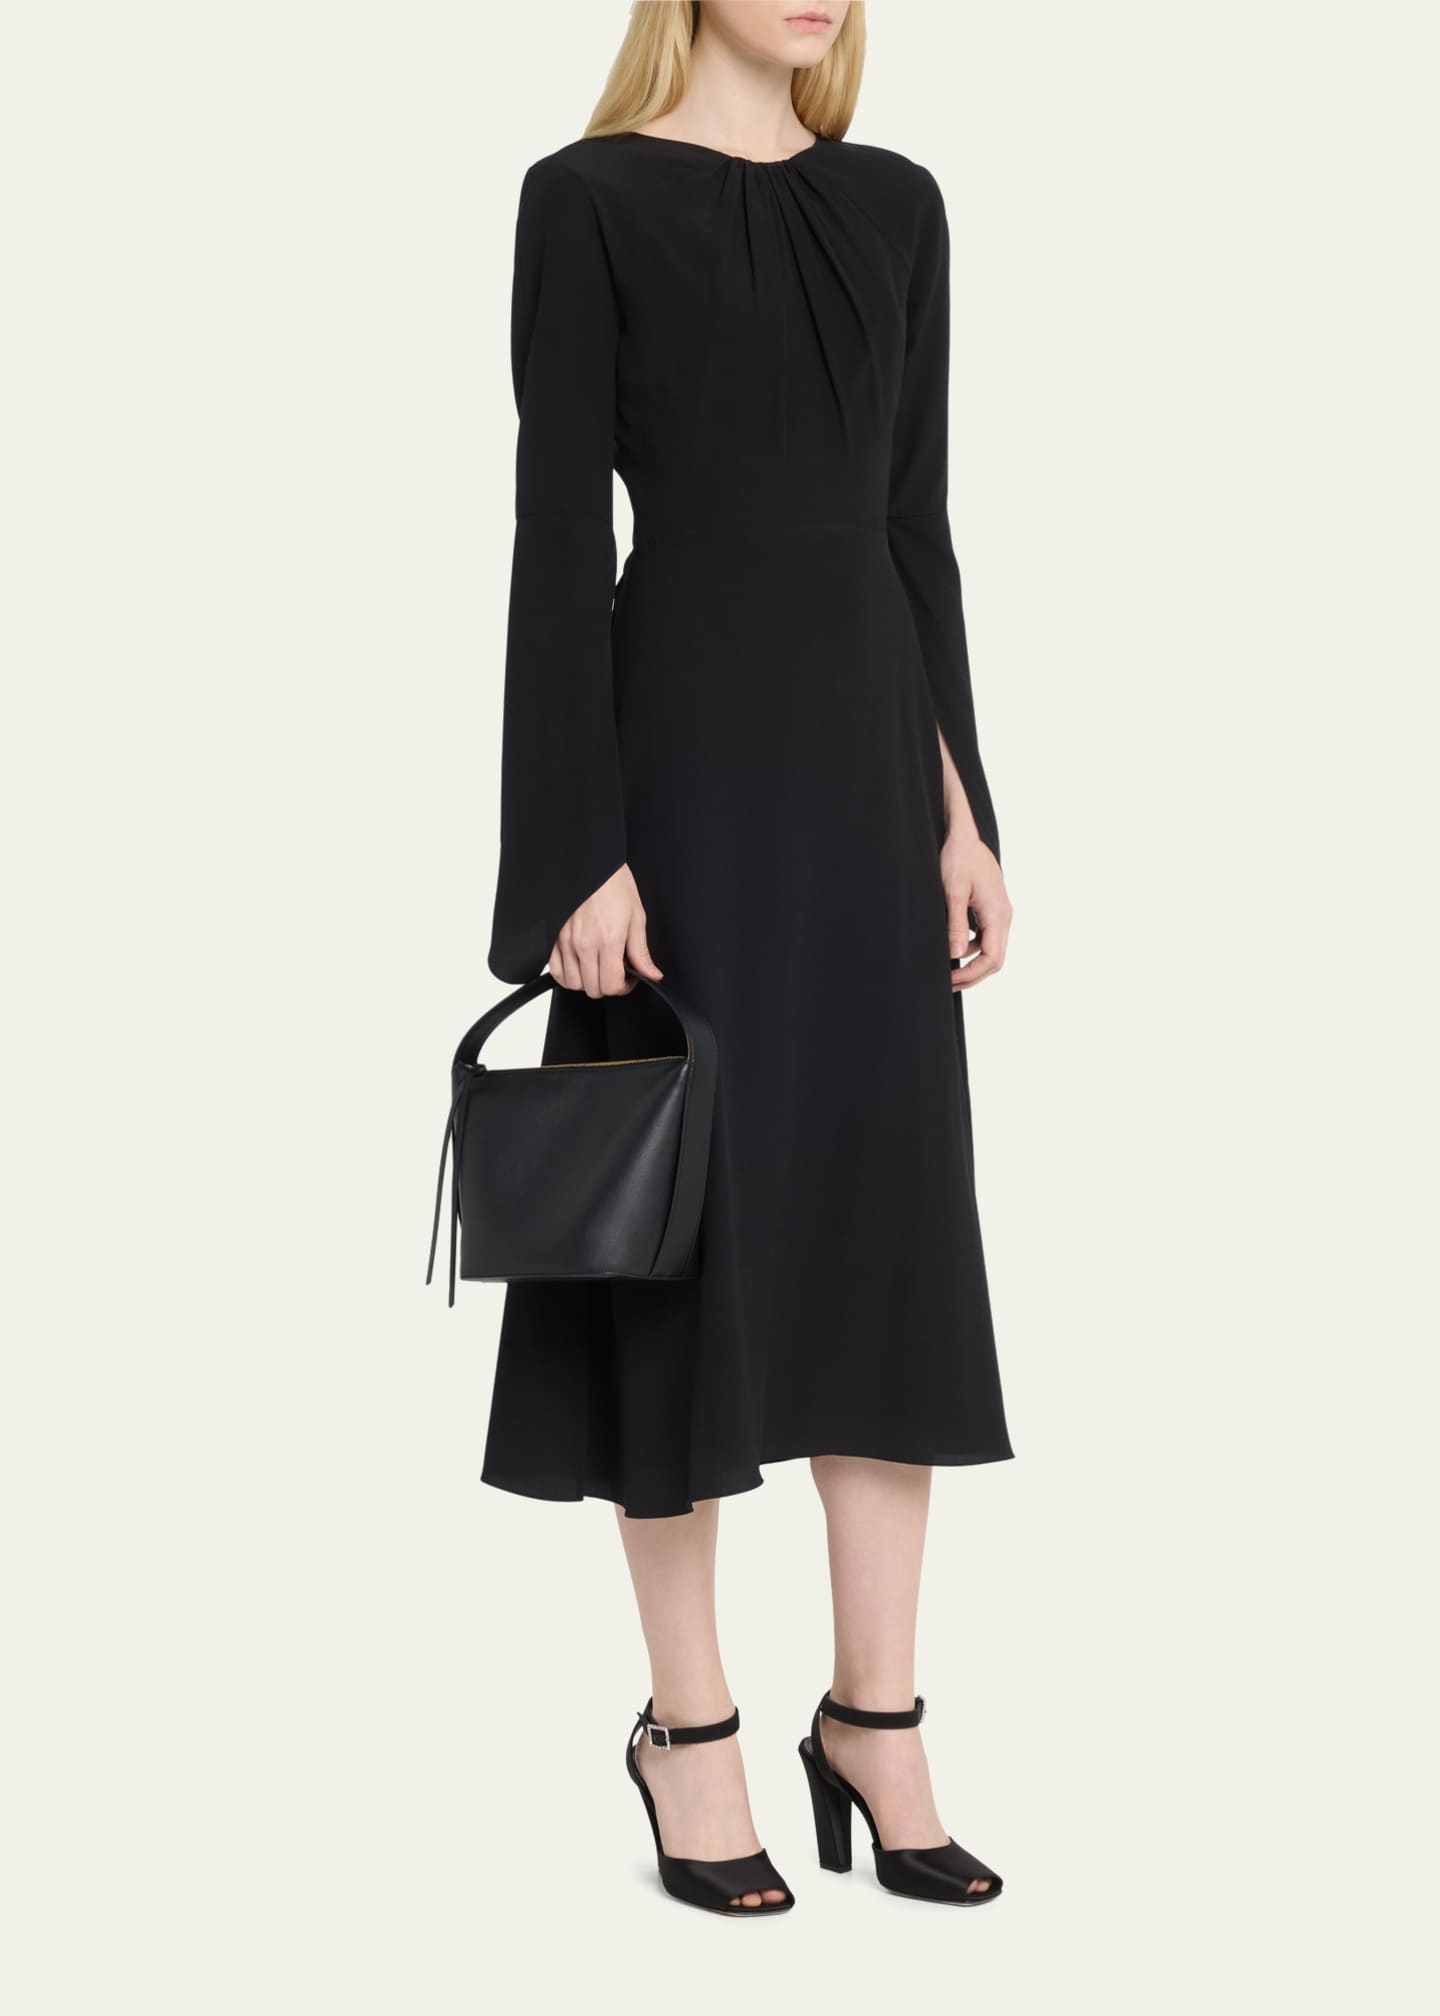 Victoria Beckham Belt Zip Leather Shoulder Bag - Bergdorf Goodman